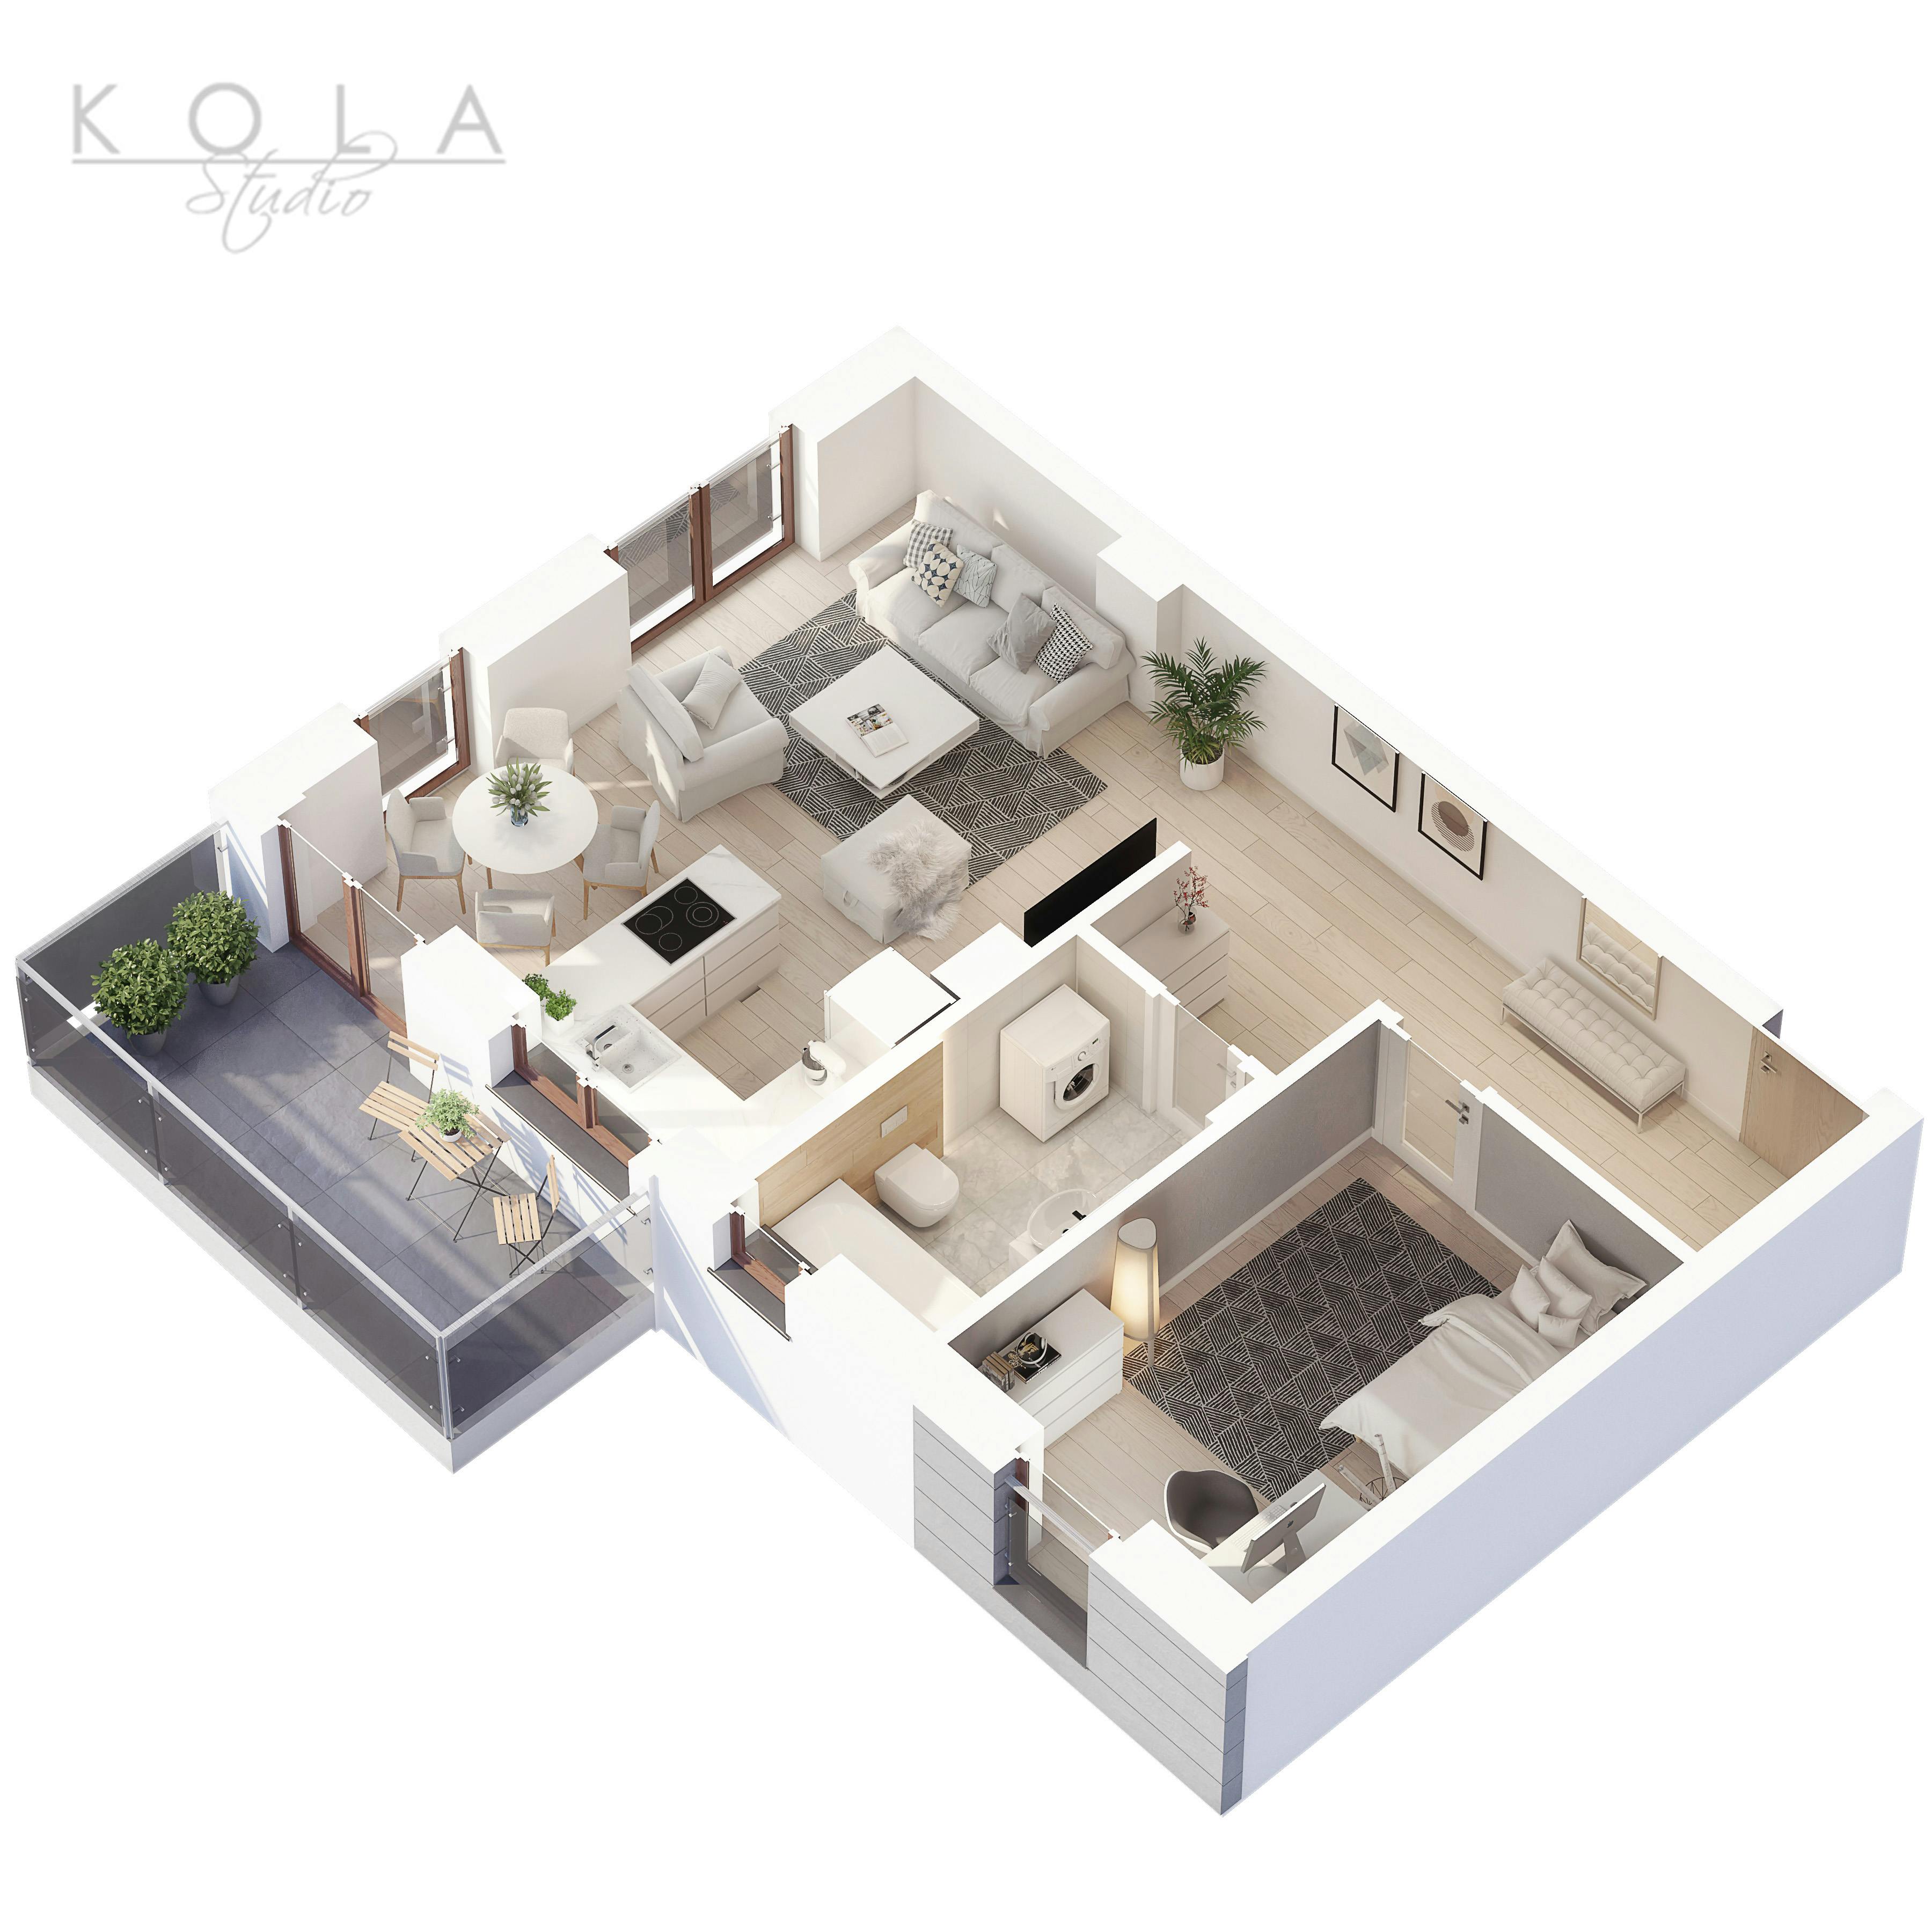 Architectural 3D floor plans KOLA Studio Architectural